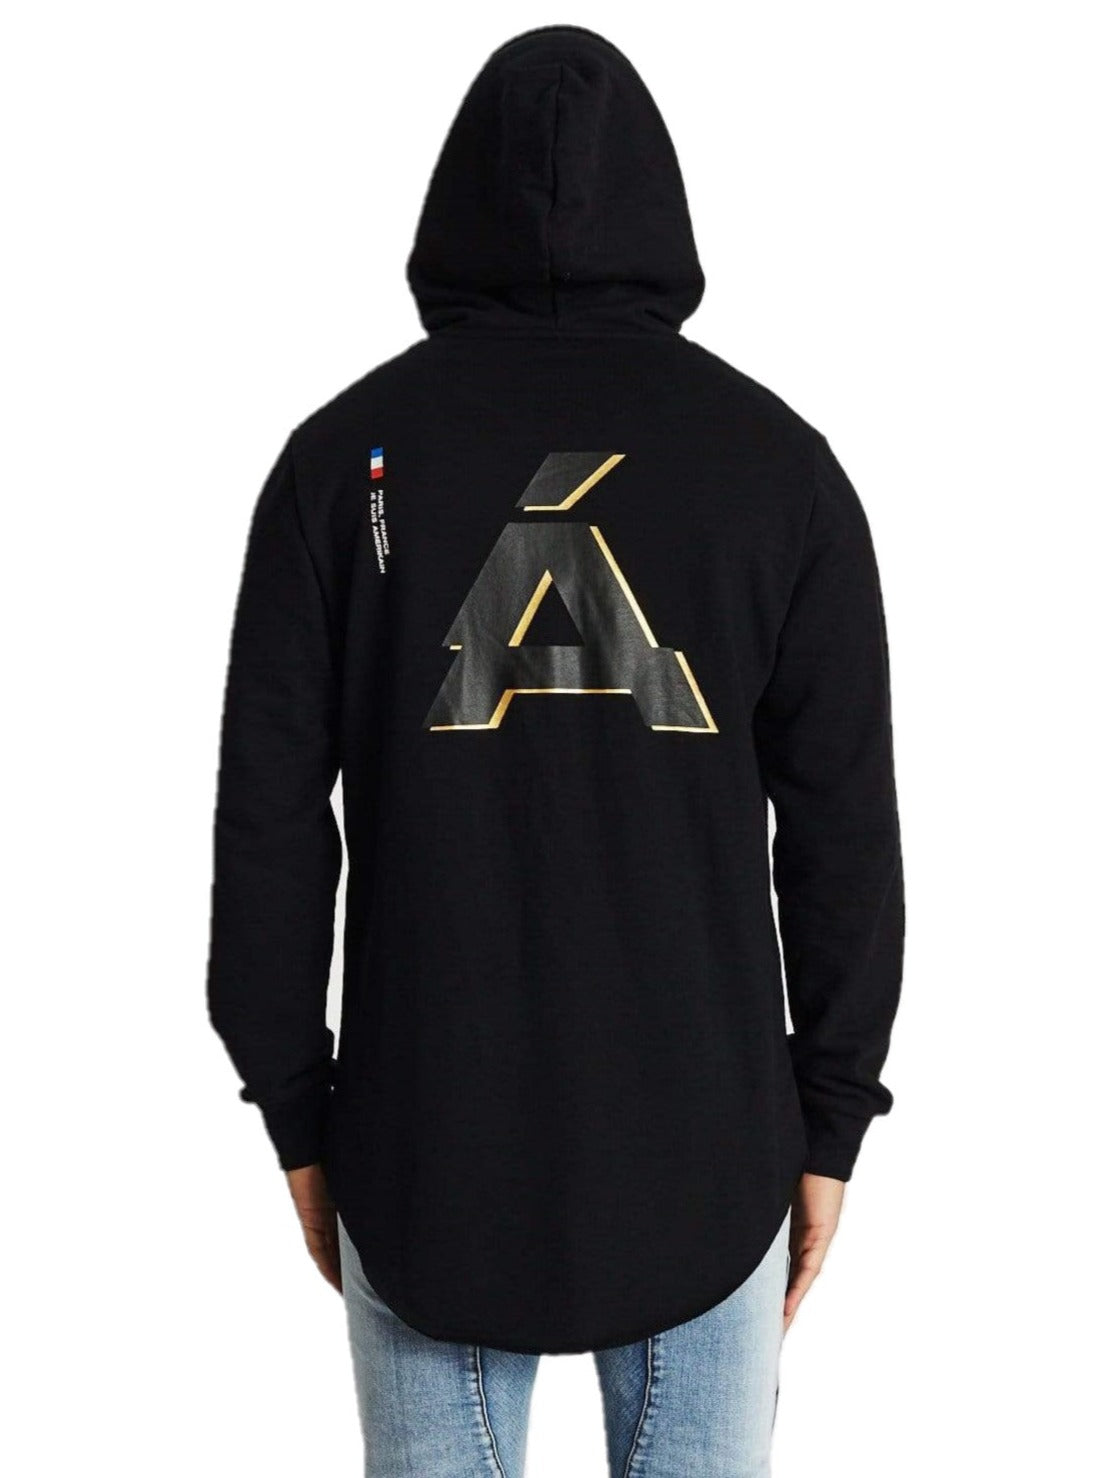 Americain - Coeur Noir Hooded Dual Curved Sweater - Jet Black